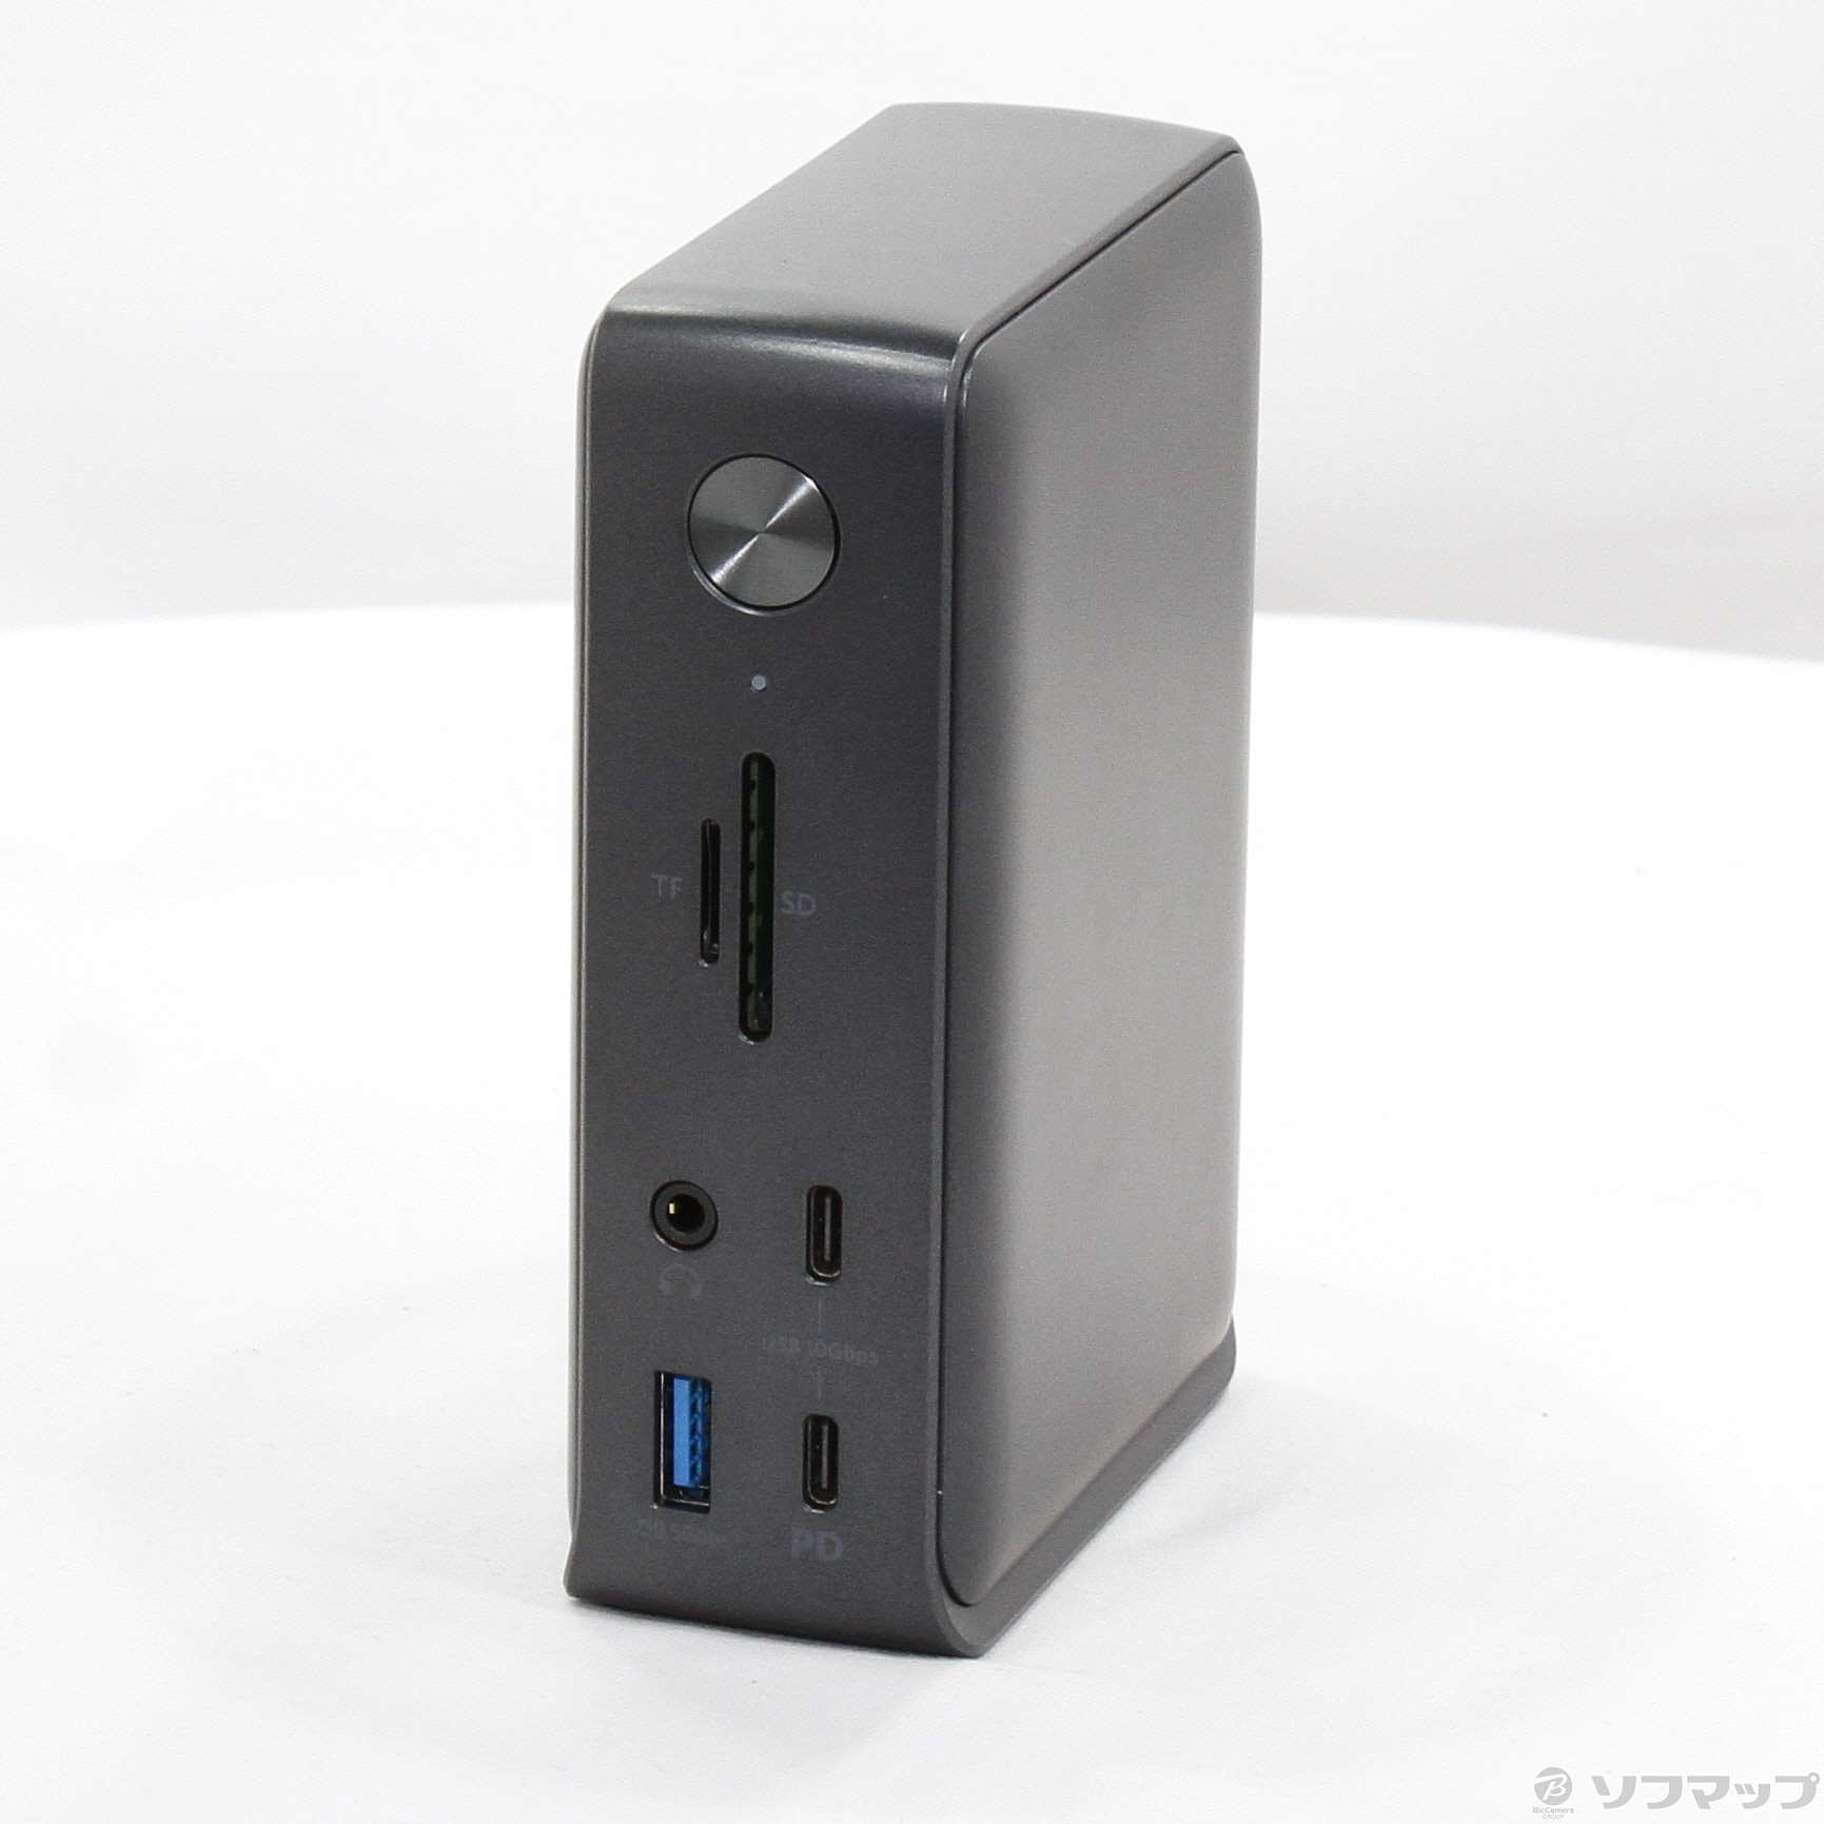 Anker PowerExpand 13-in-1 USB-C Dock ドッキングステーション